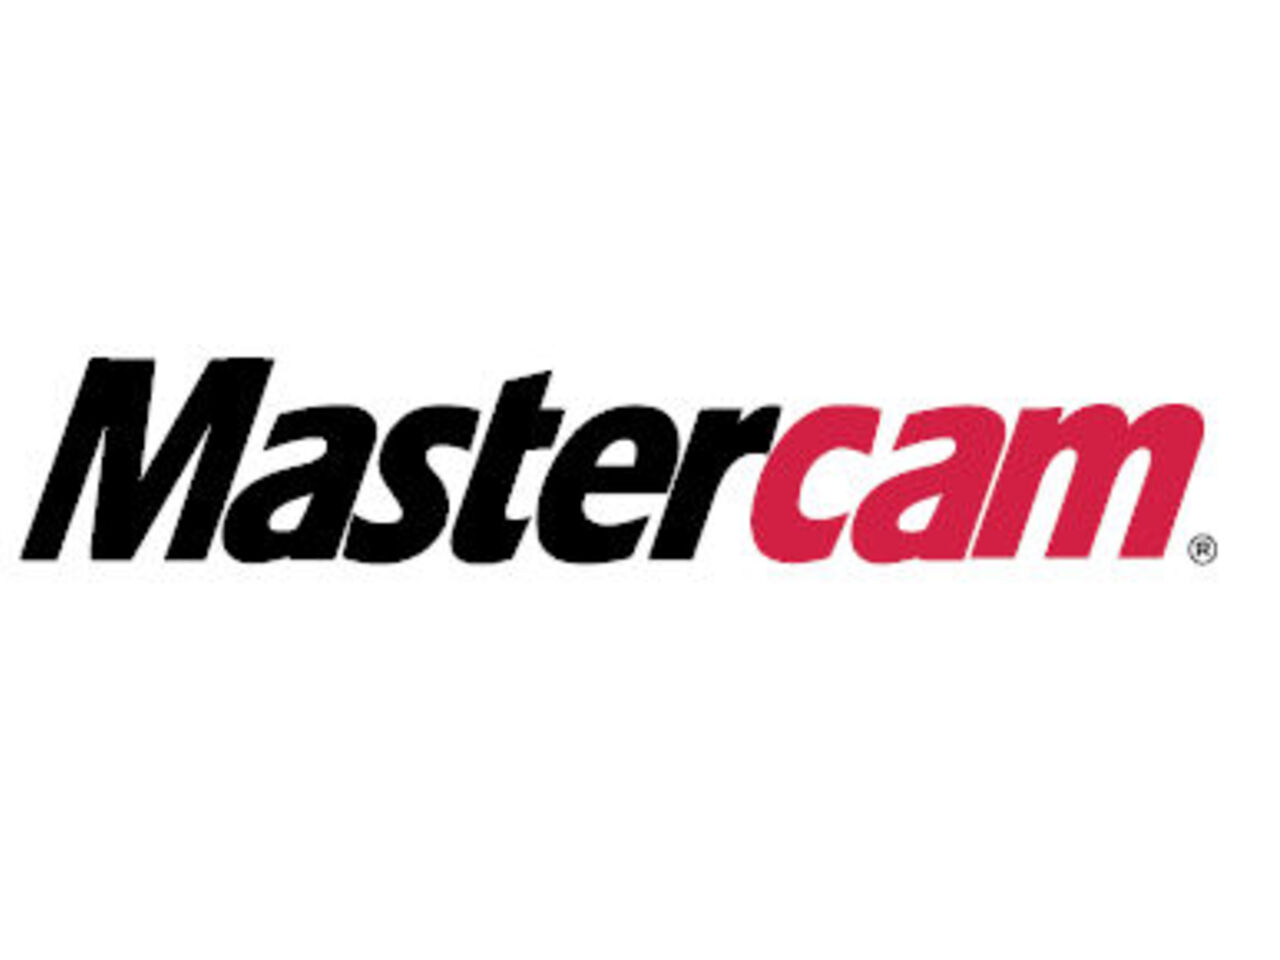 Mastercam joins WorldSkills as a Global Partner